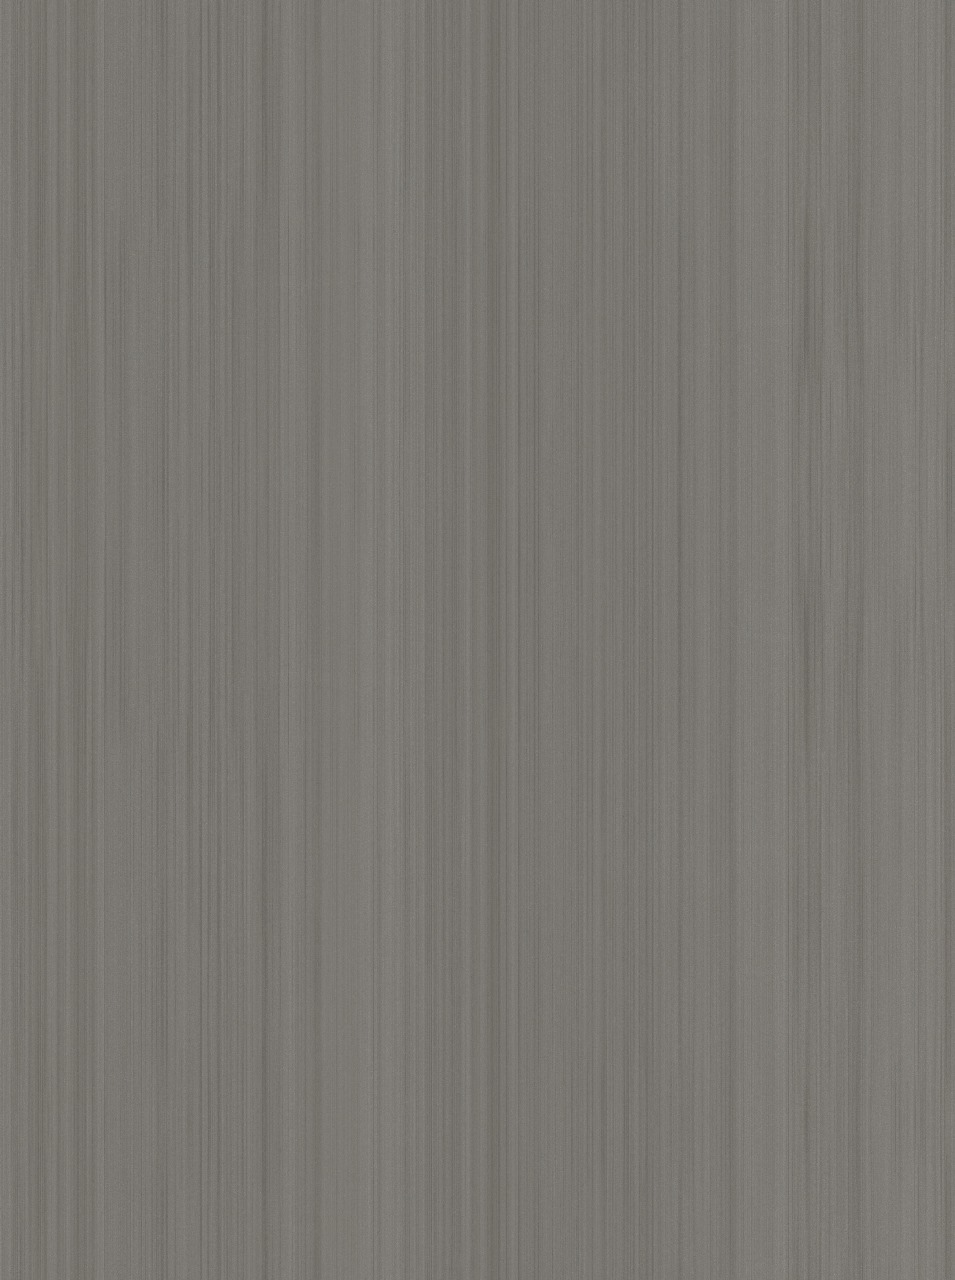 Бамбуковая панель MW020, 1200*2800*8мм, имитация дерева, платиново-серый